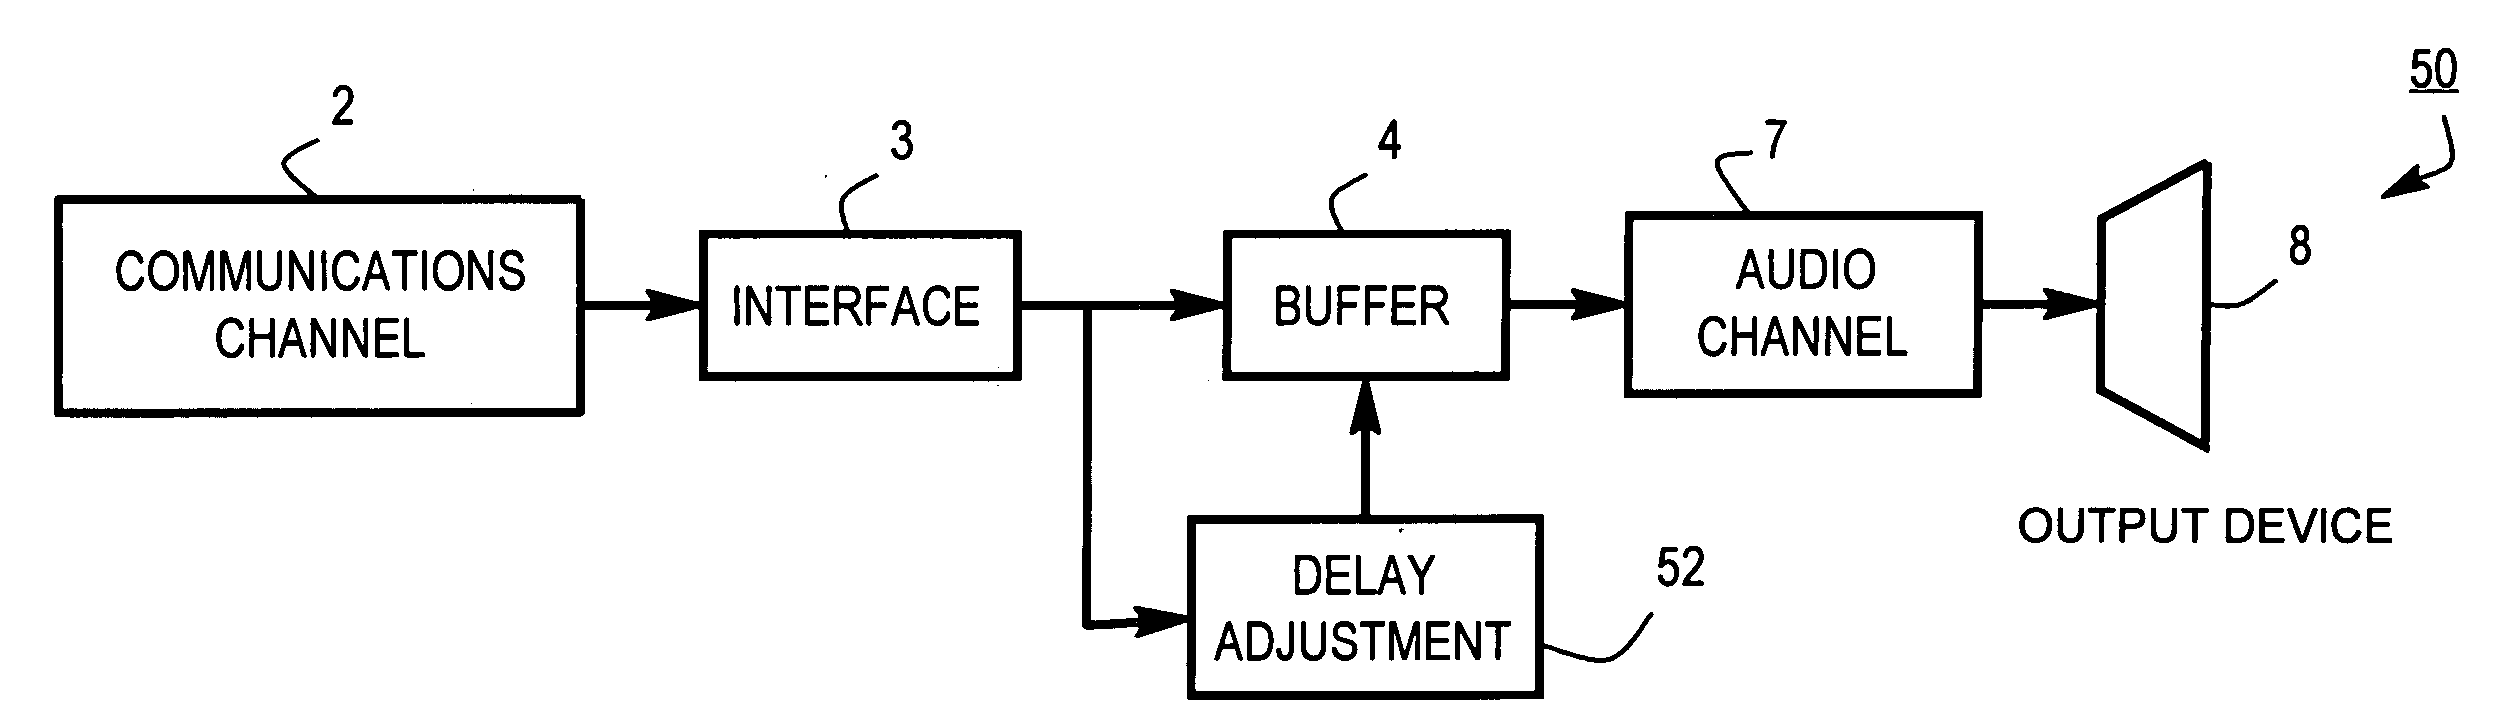 Audio receiver having adaptive buffer delay